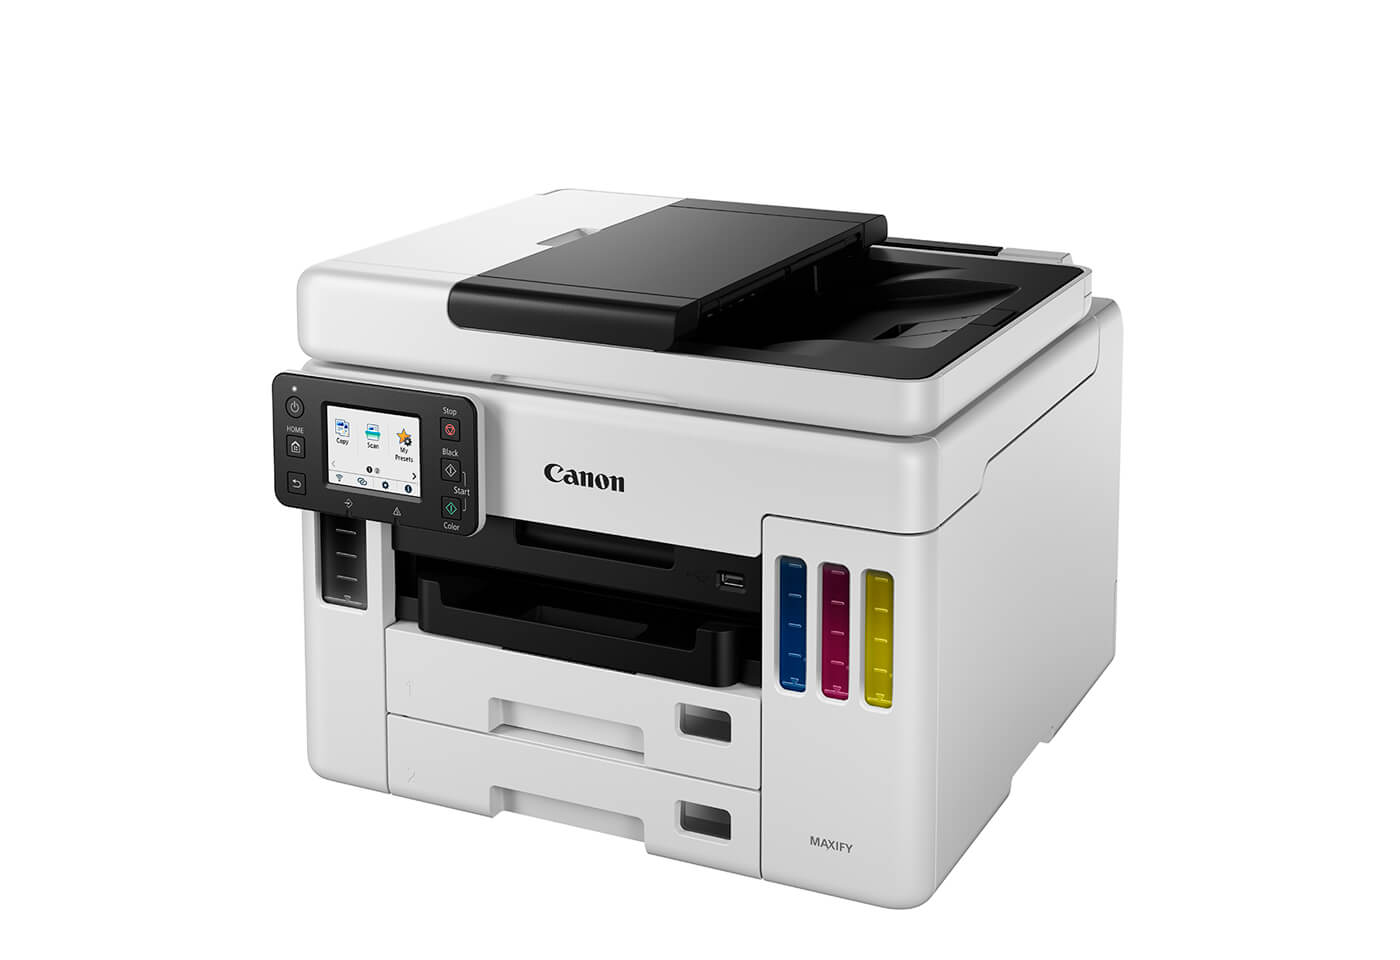 Side profile image of MAXIFY GX7060 MegaTank office printer